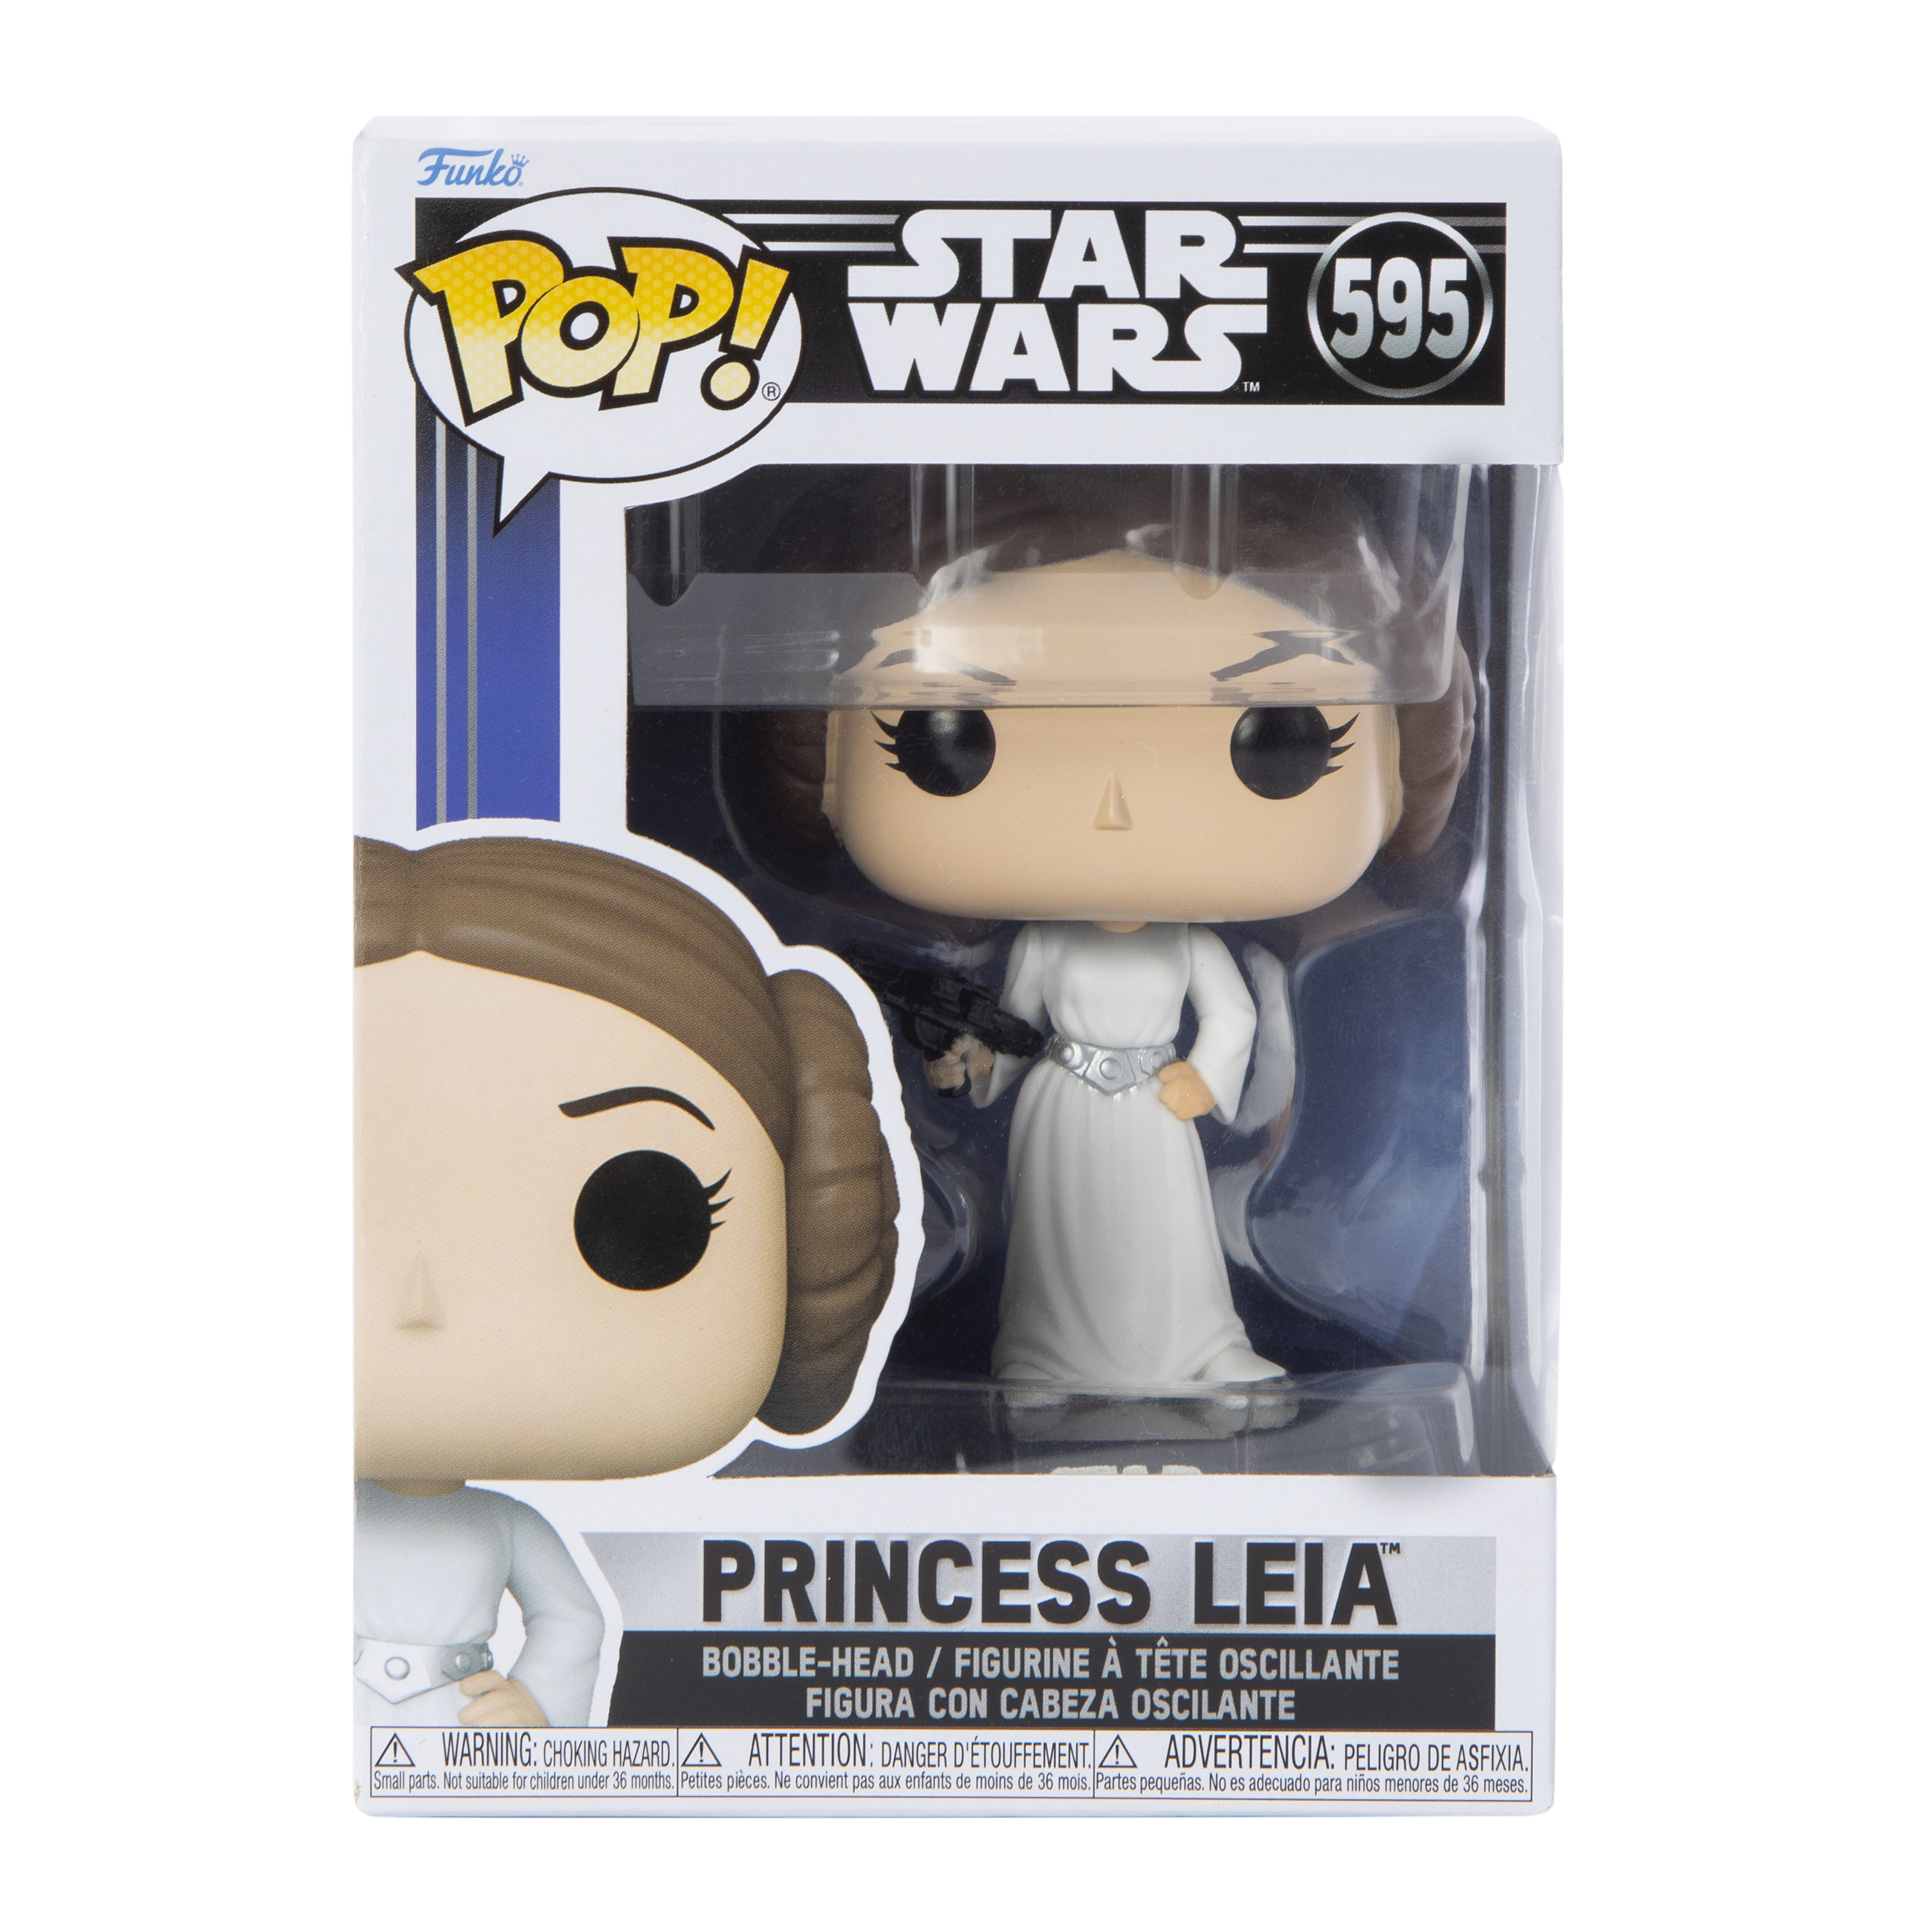 Funko Pop! Star Wars Princess Leia Bobble-Head Figure